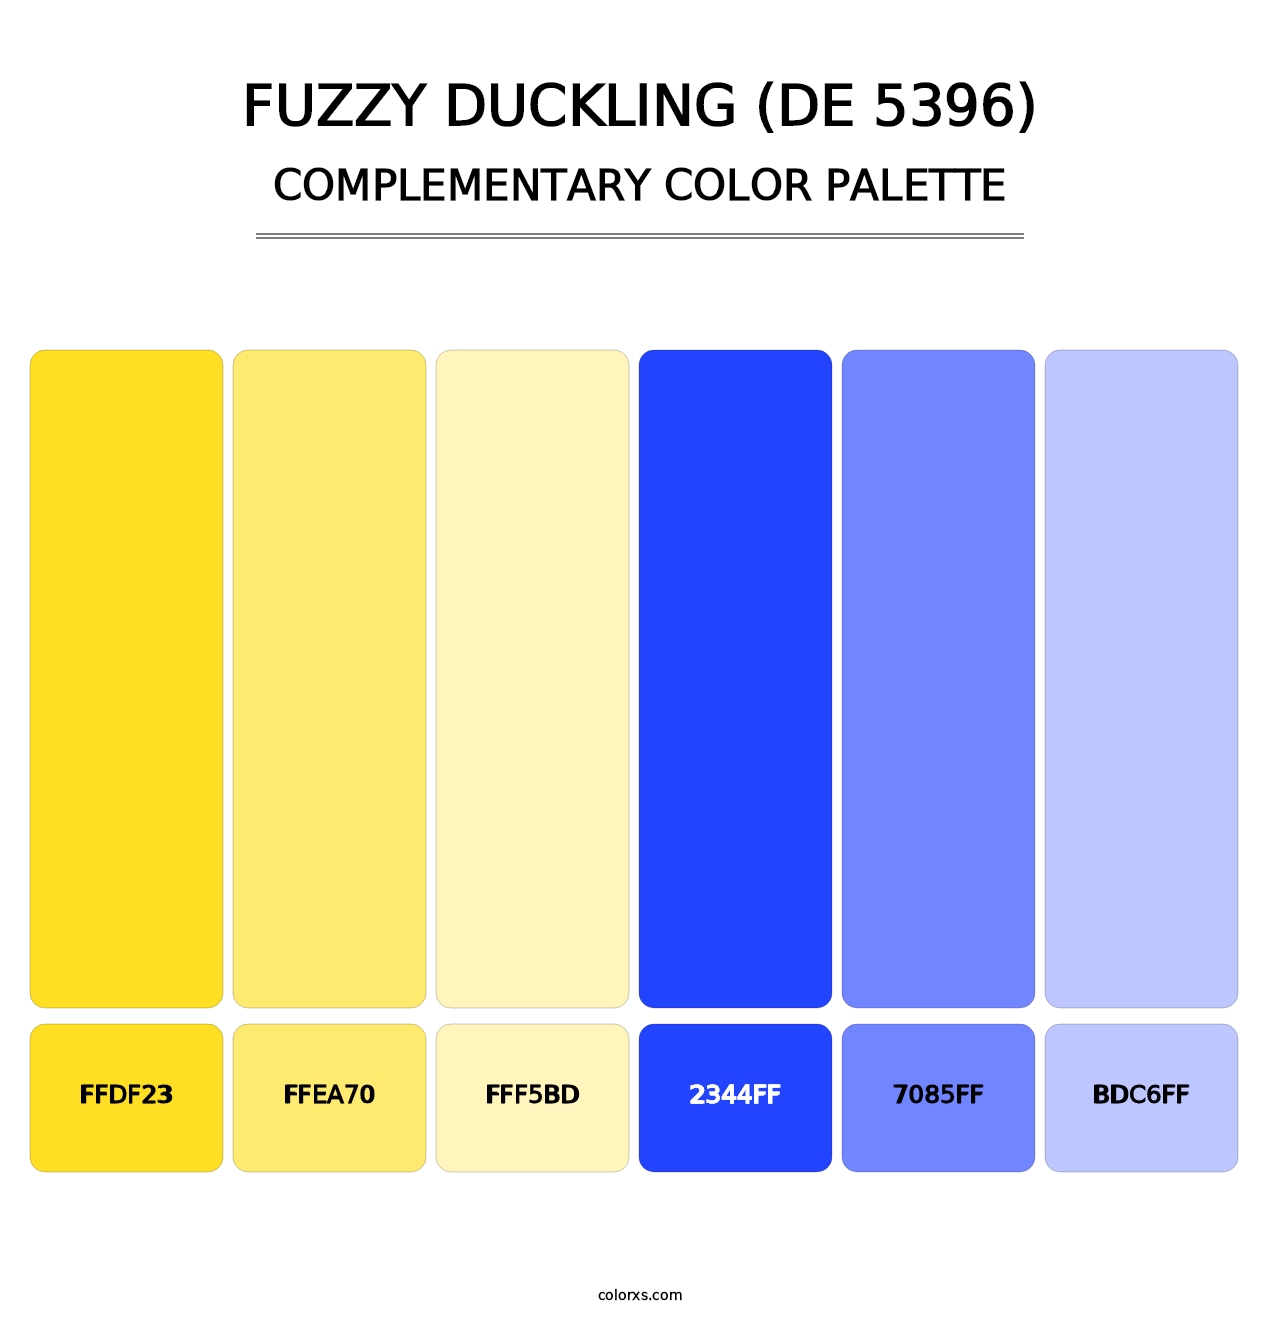 Fuzzy Duckling (DE 5396) - Complementary Color Palette